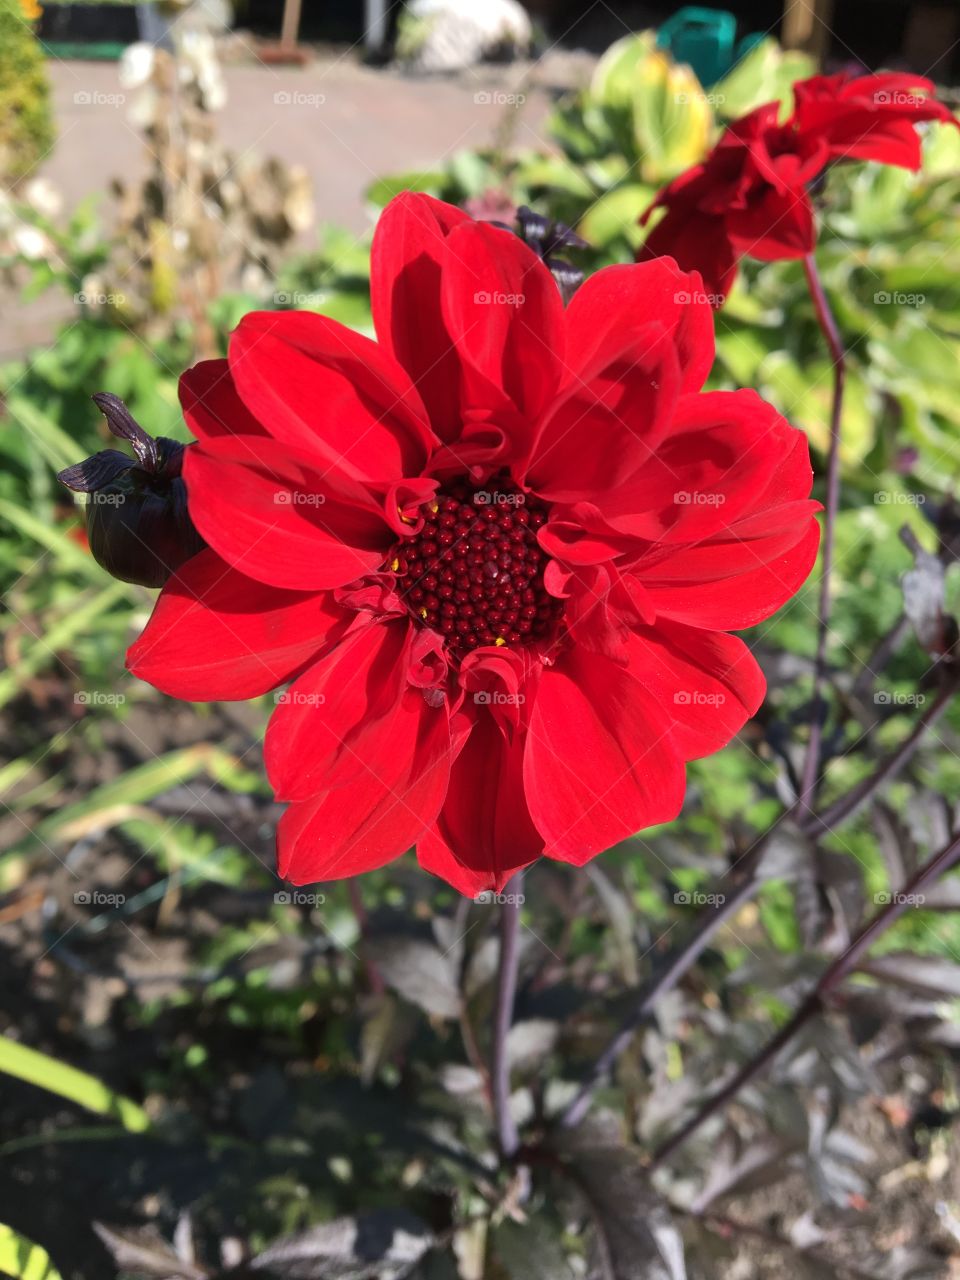 Wow! Stunning flower